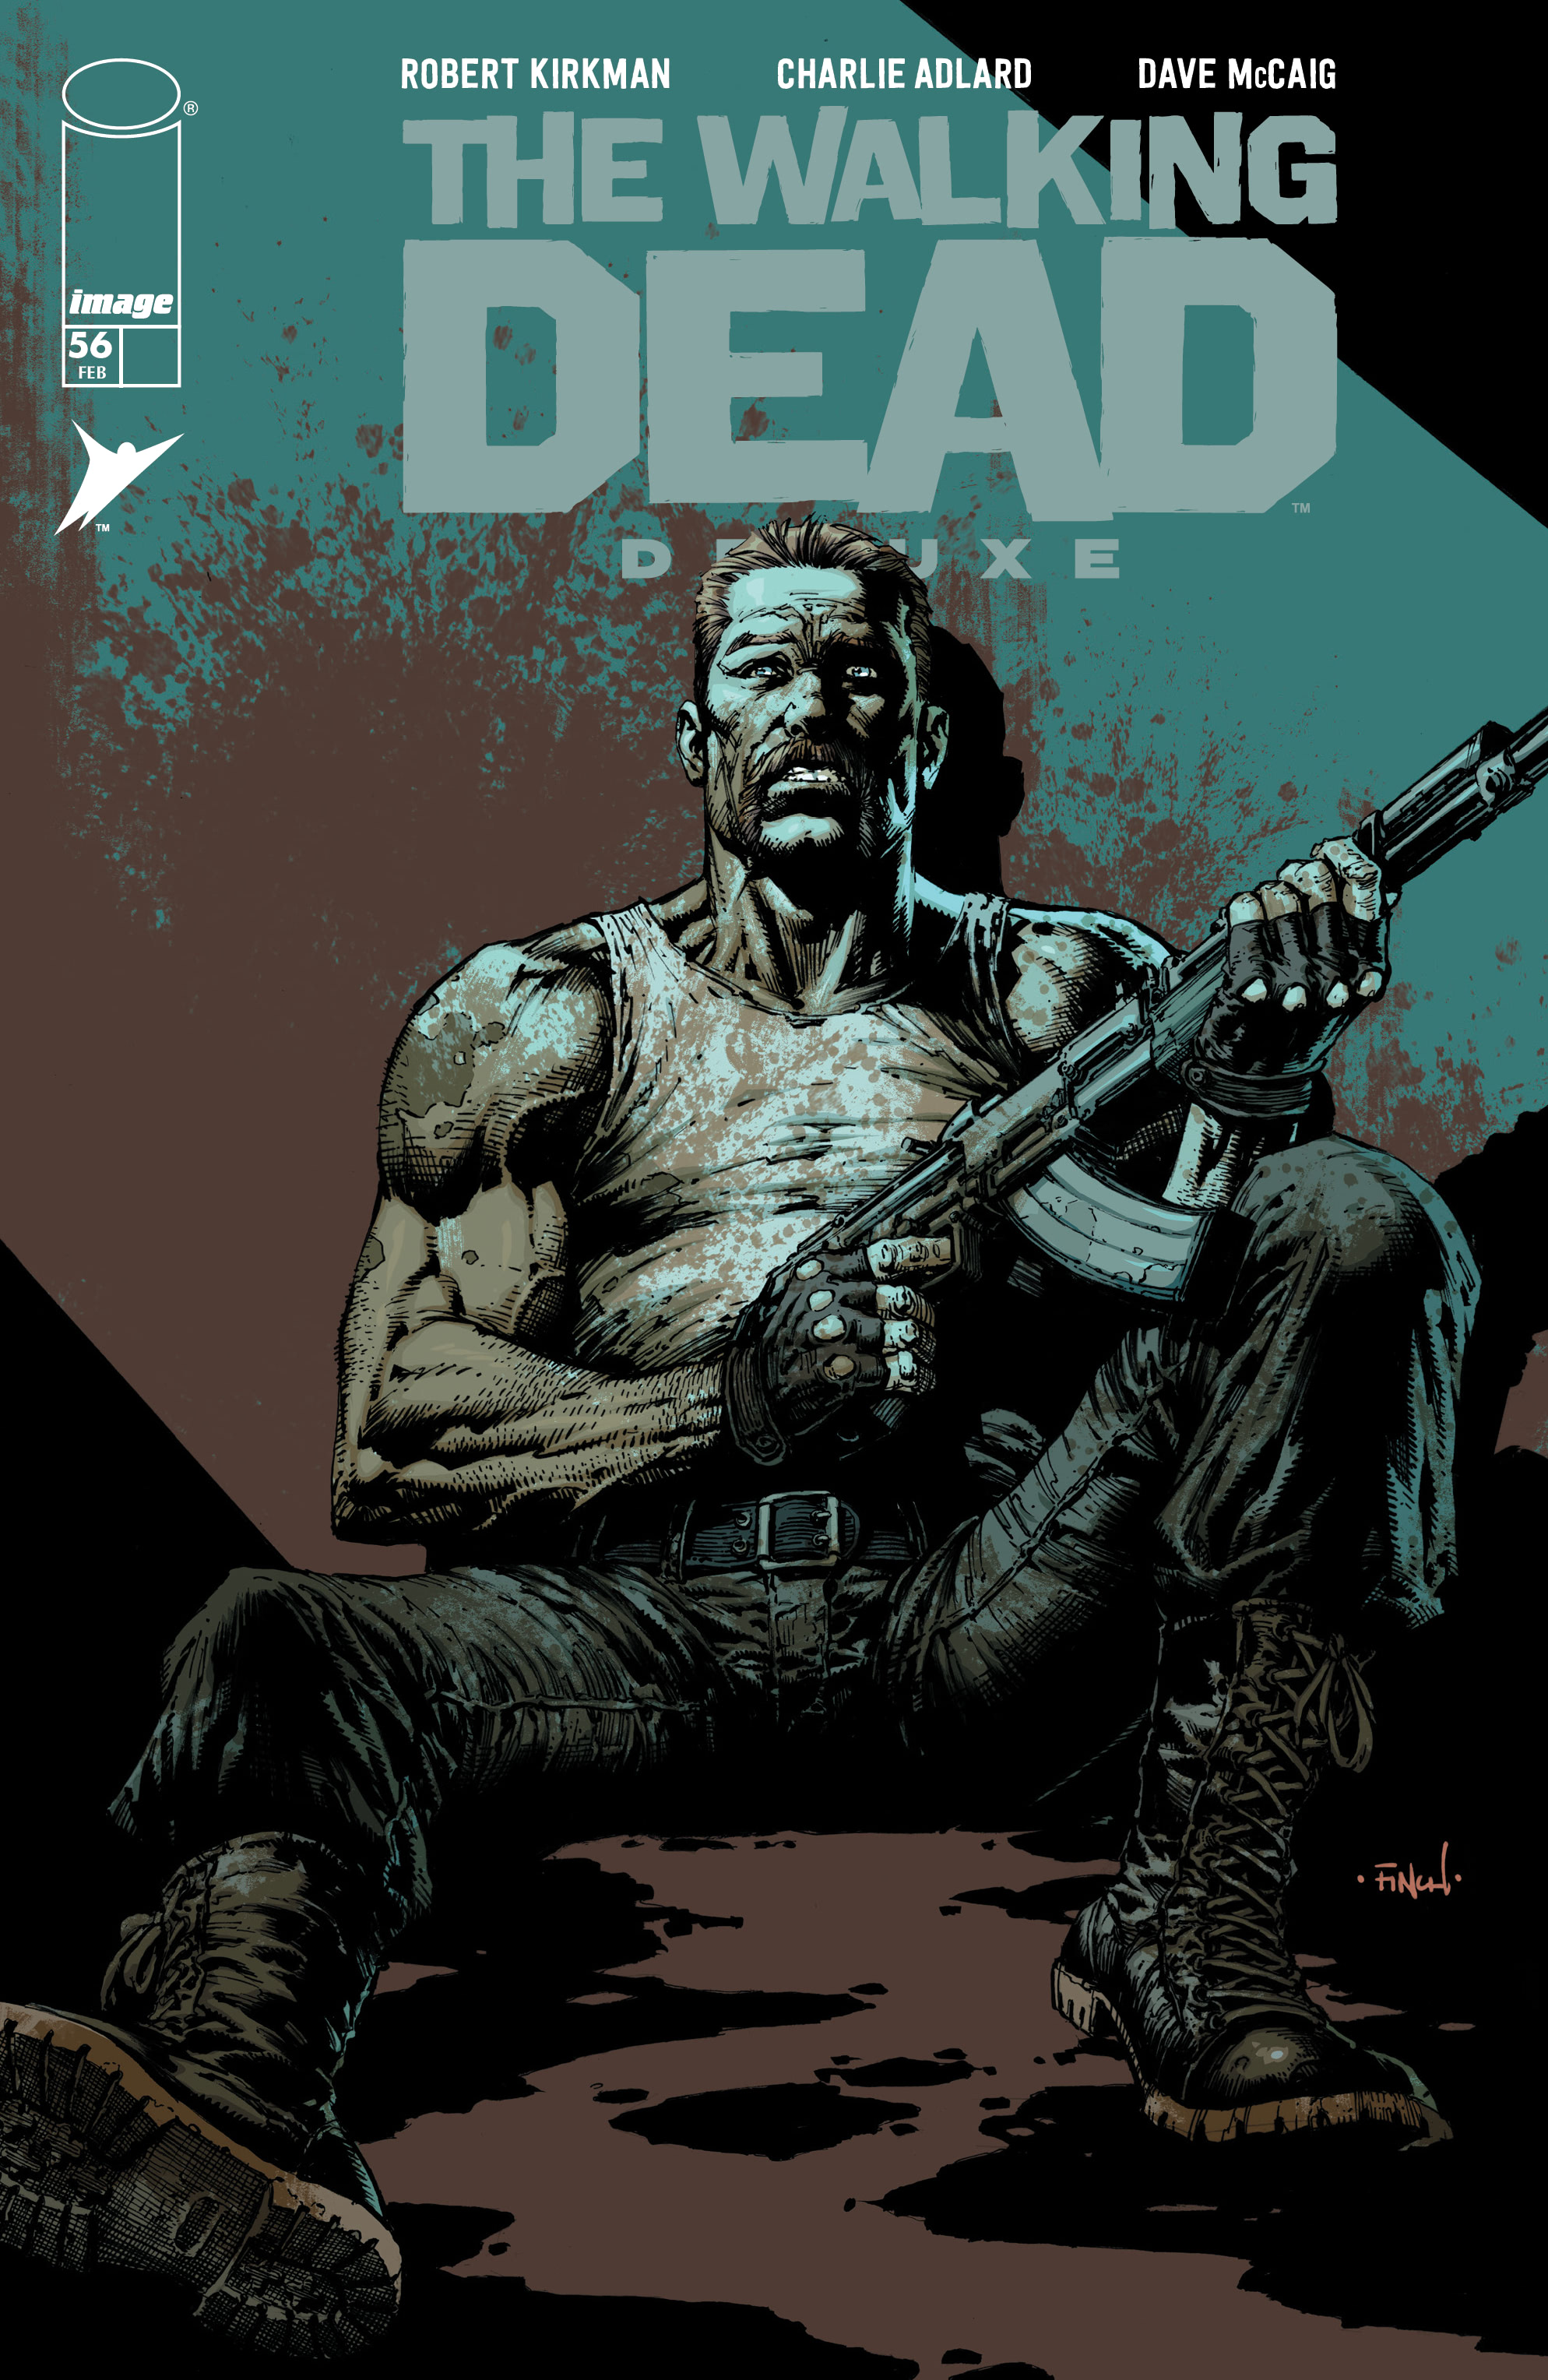 Read online The Walking Dead Deluxe comic -  Issue #56 - 1